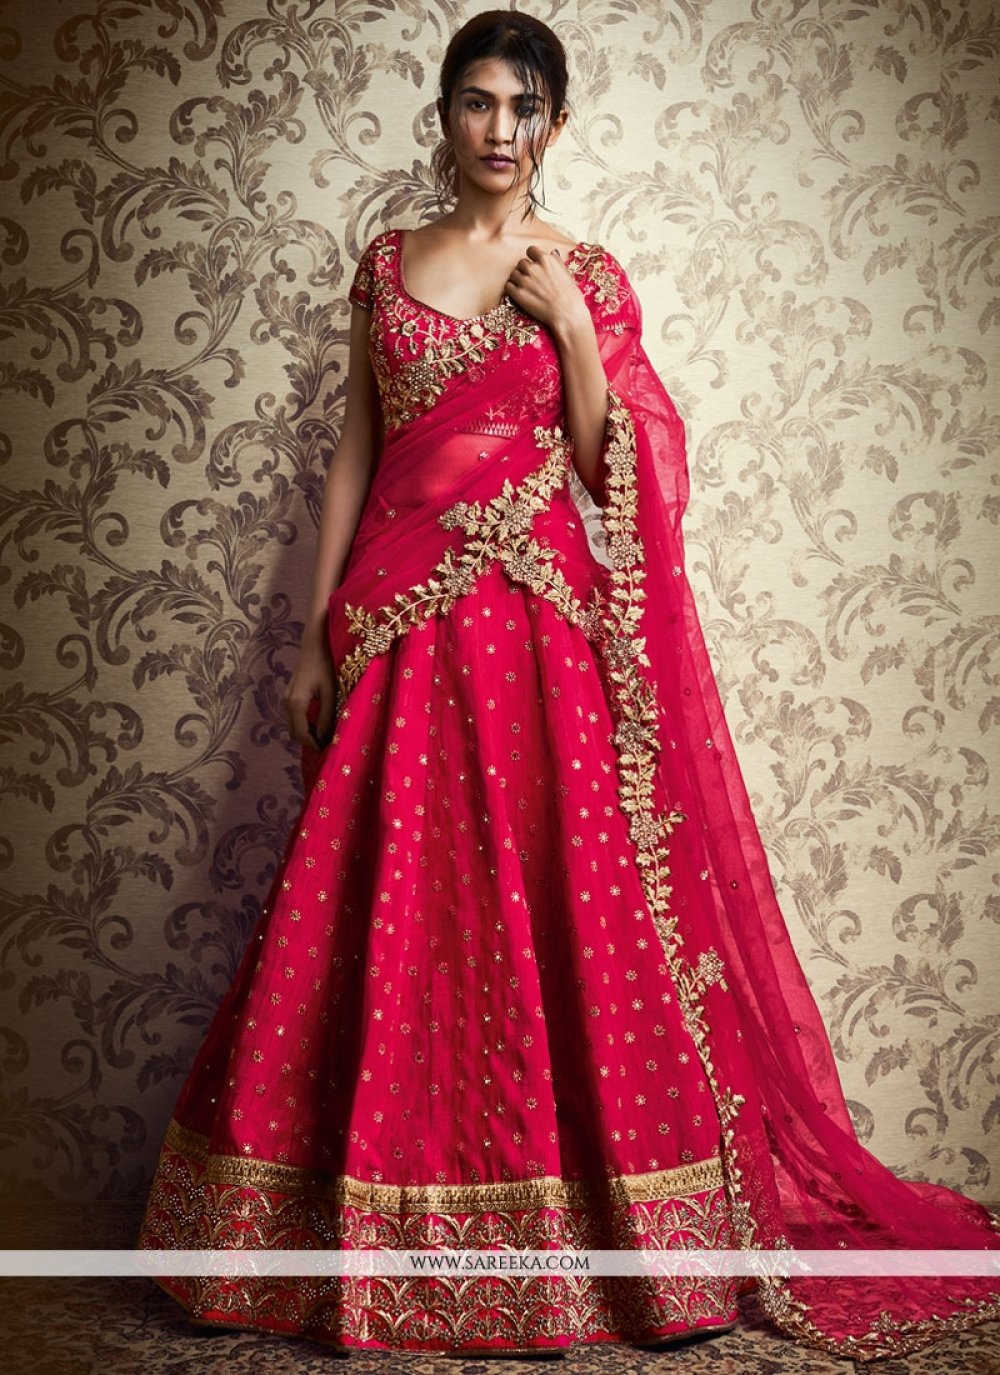 Classy tri colored lehenga style saree | Princesinghania's Blog